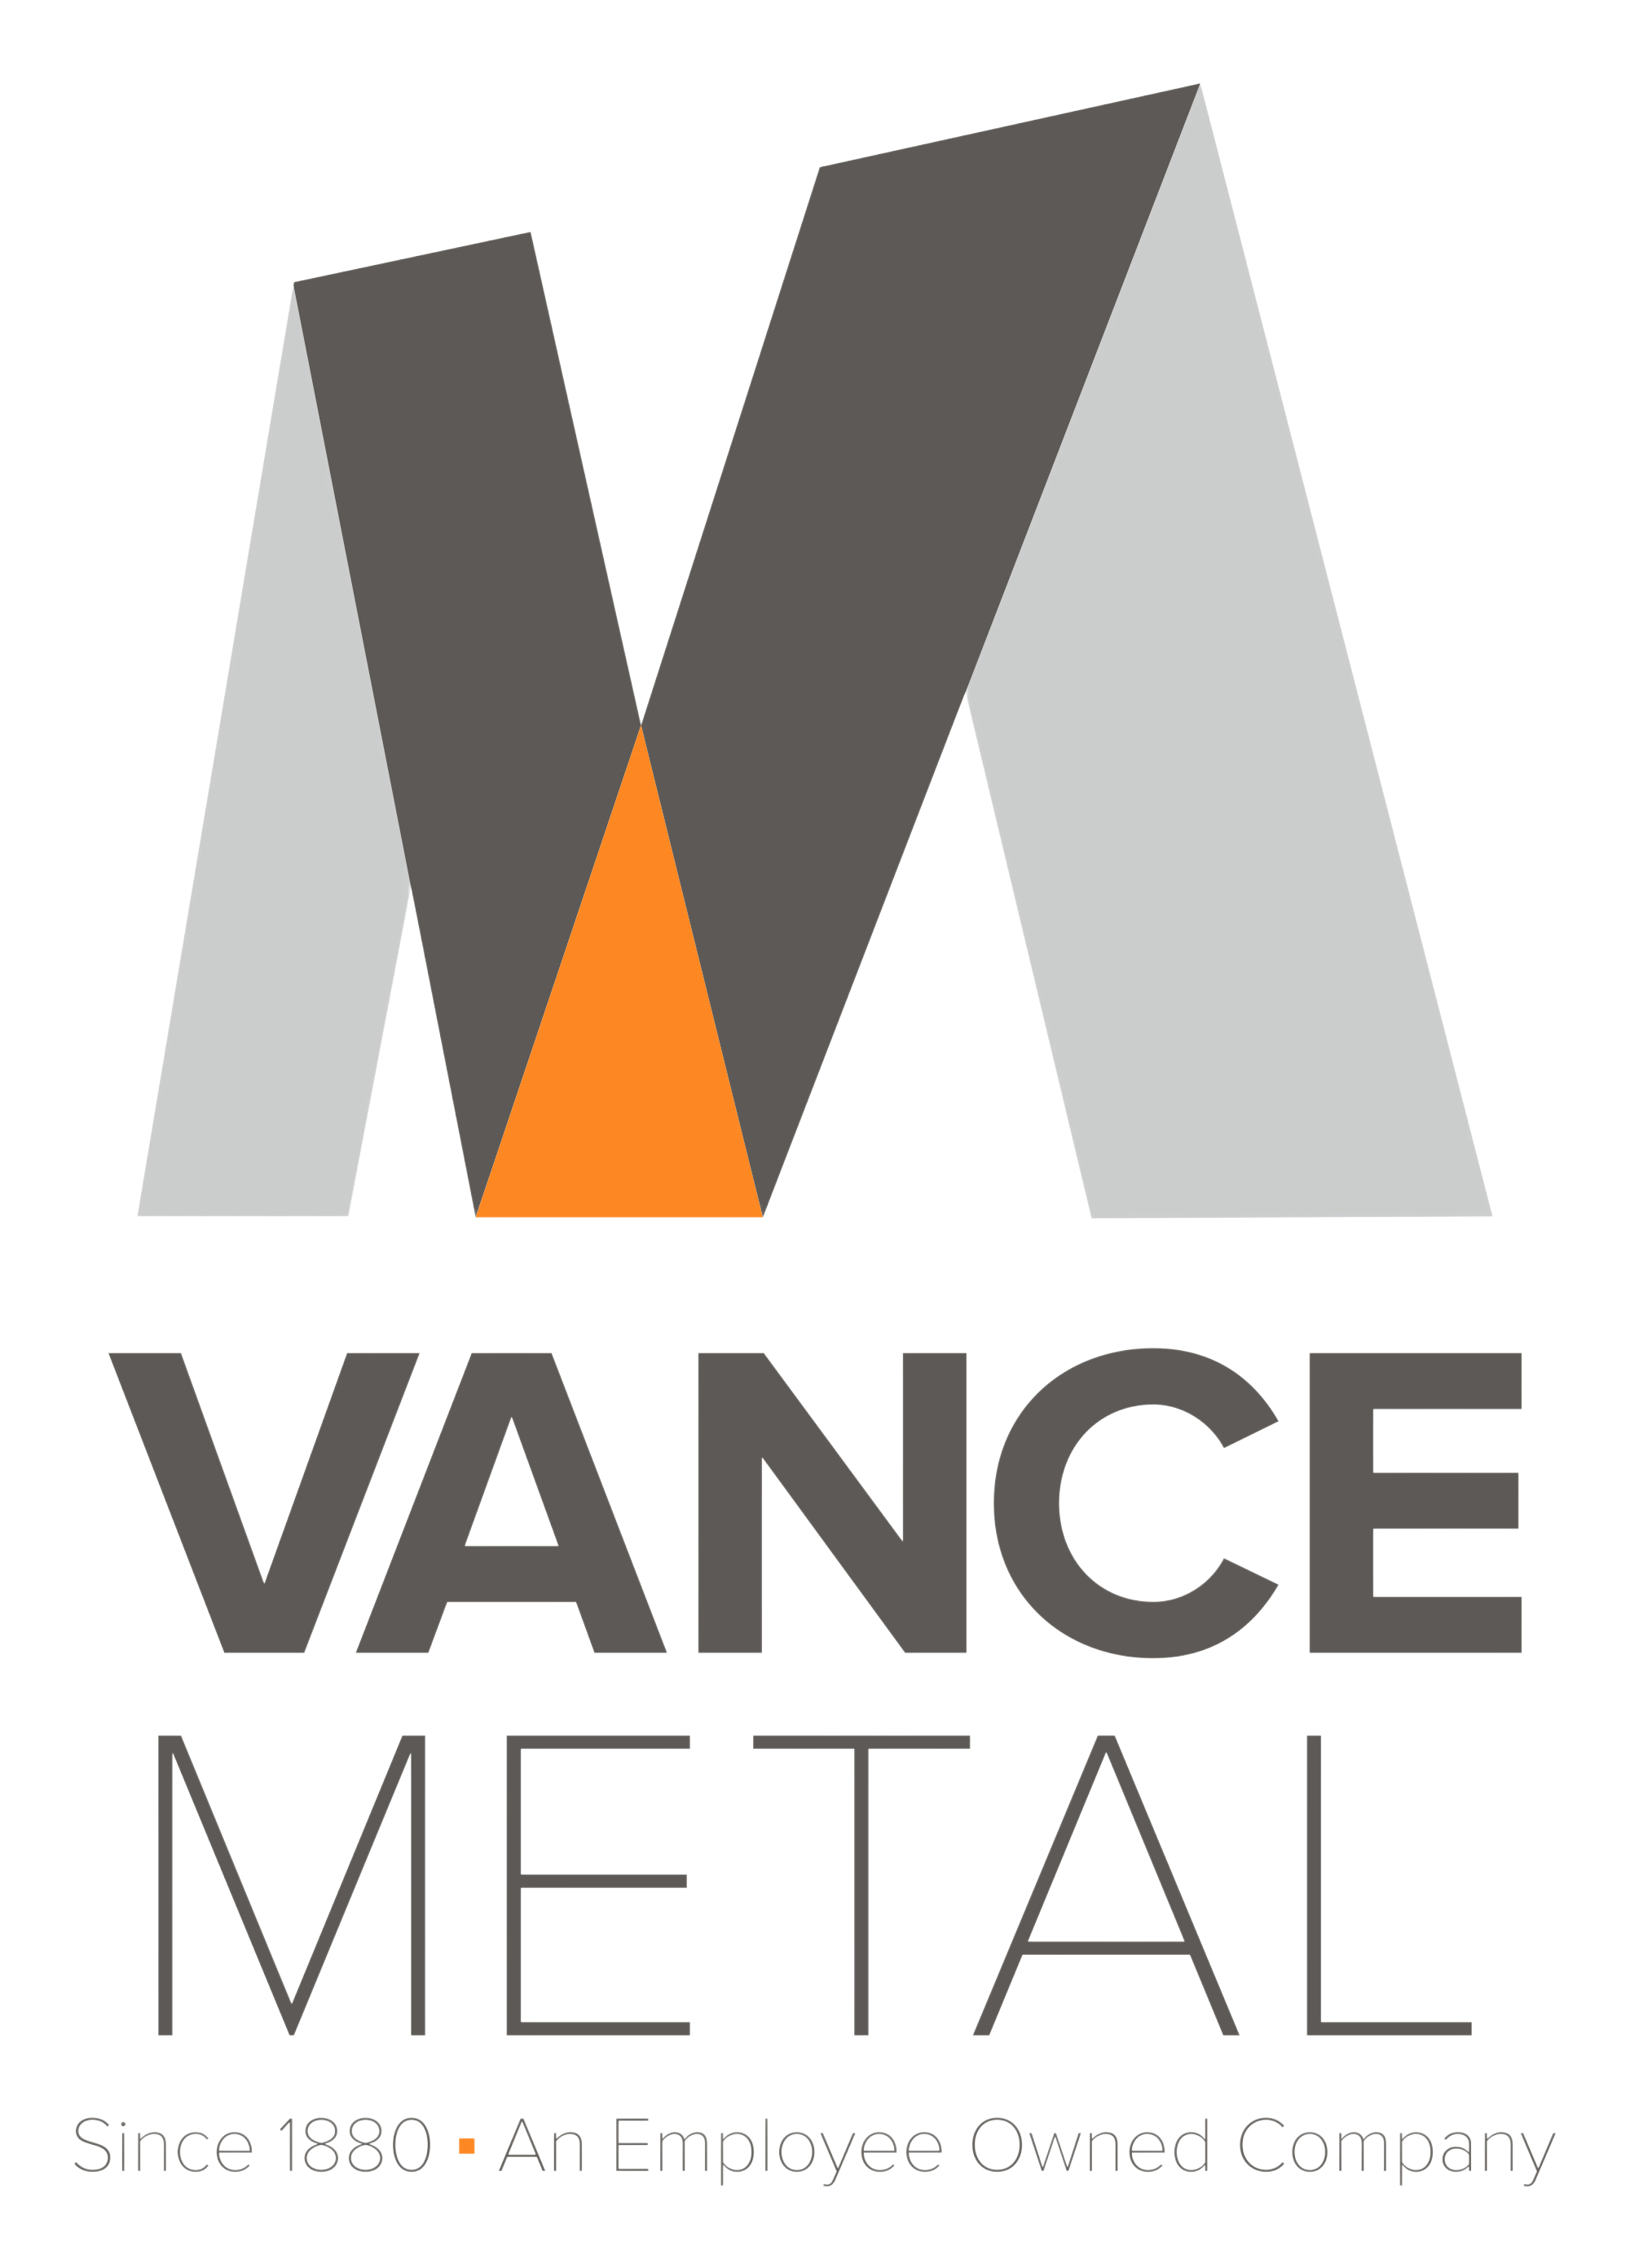 Vance Metal Fabricators